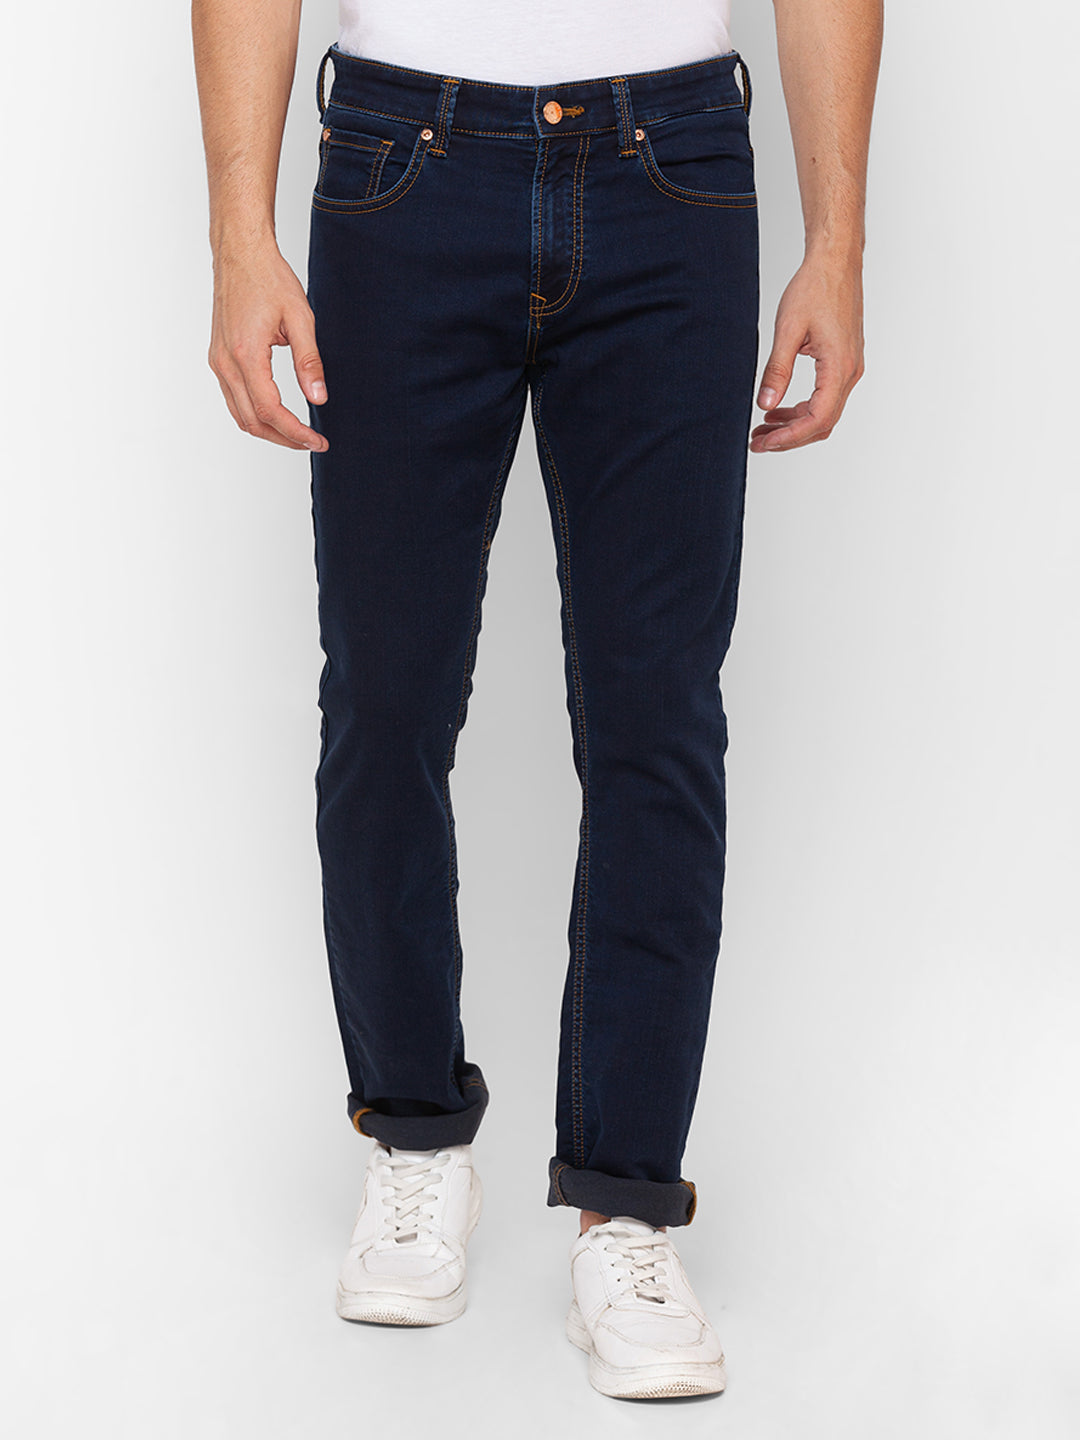 Buy Blue Jeans for Men by SPYKAR Online | Ajio.com